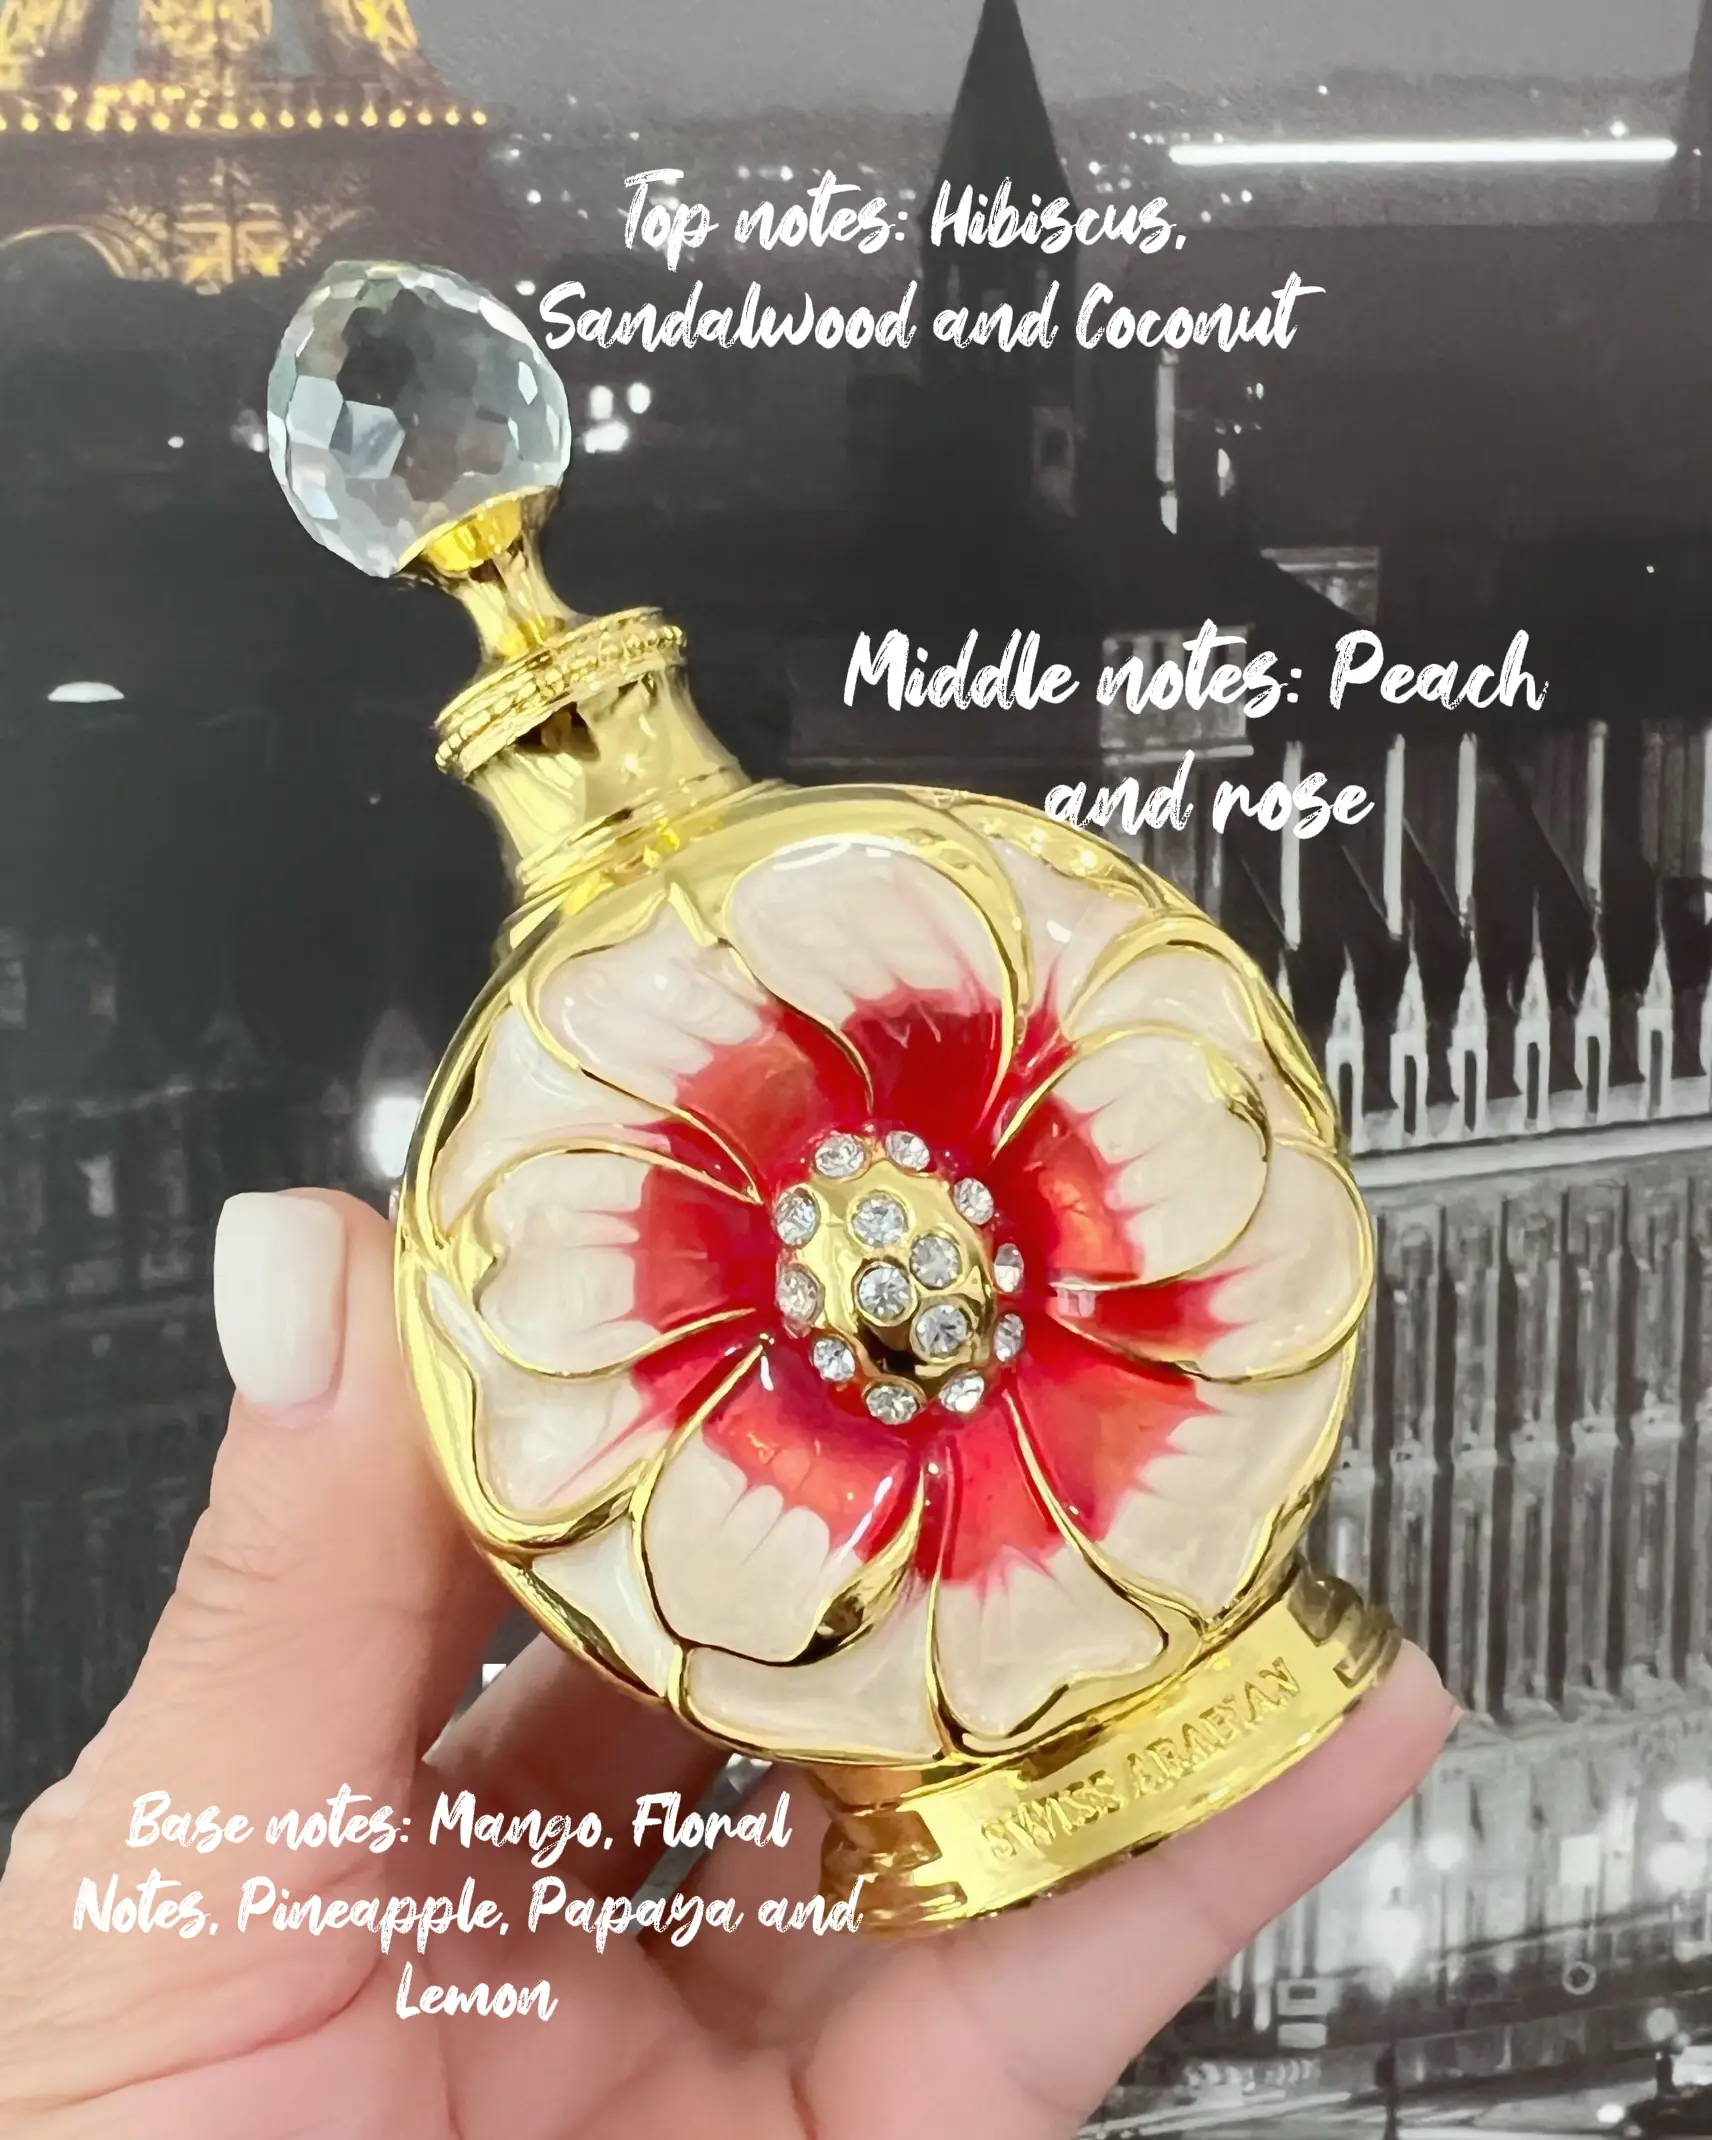 Layali Rouge by Swiss Arabian its a beautiful sweet fruity fragrance o, Perfume Oils